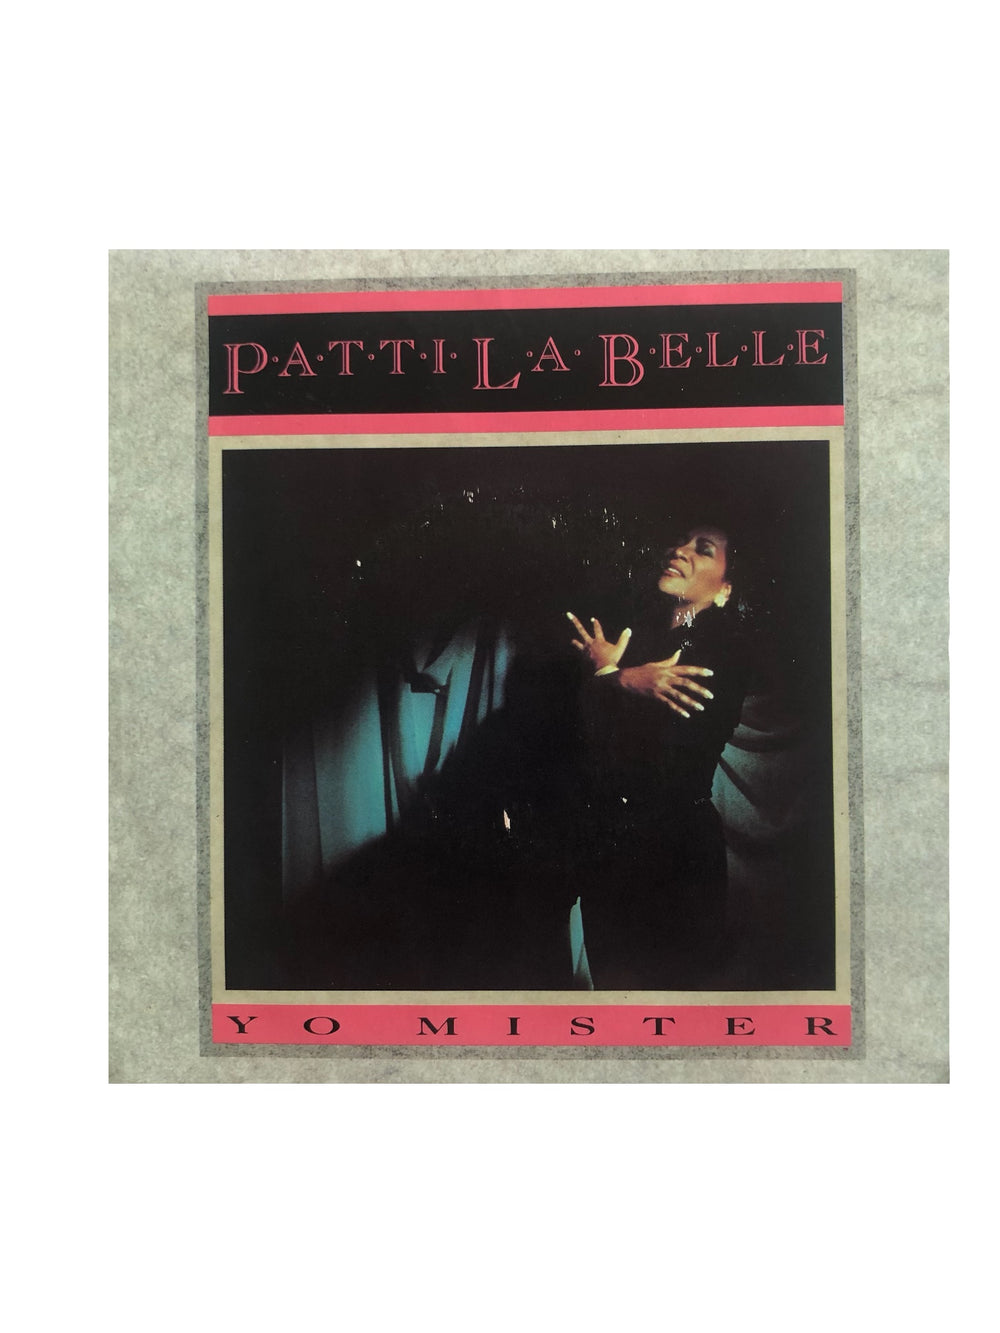 Prince – Patti La Belle Yo Mister 7 Inch Vinyl Single UK Preloved:1989